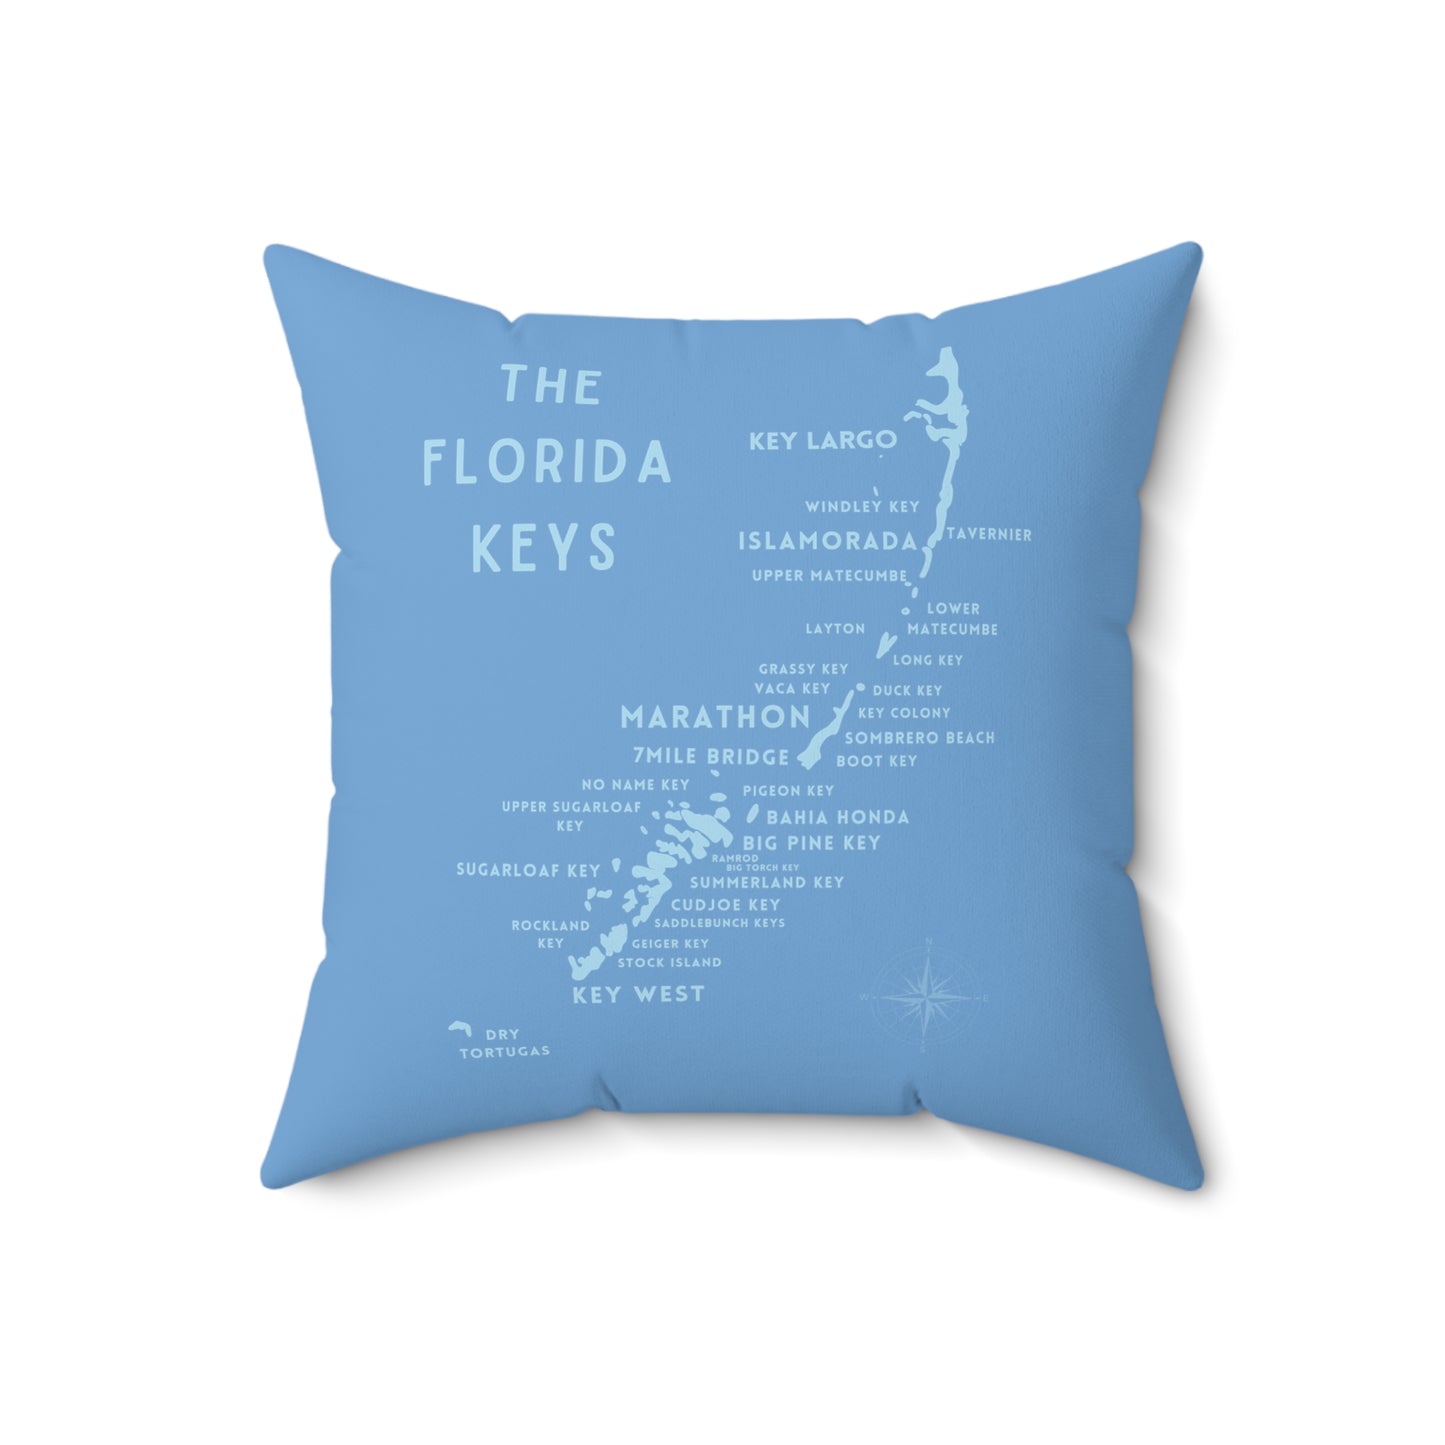 Florida Keys Map - blue throw pillow - four sizes - marathon, islamorada, key west, key largo